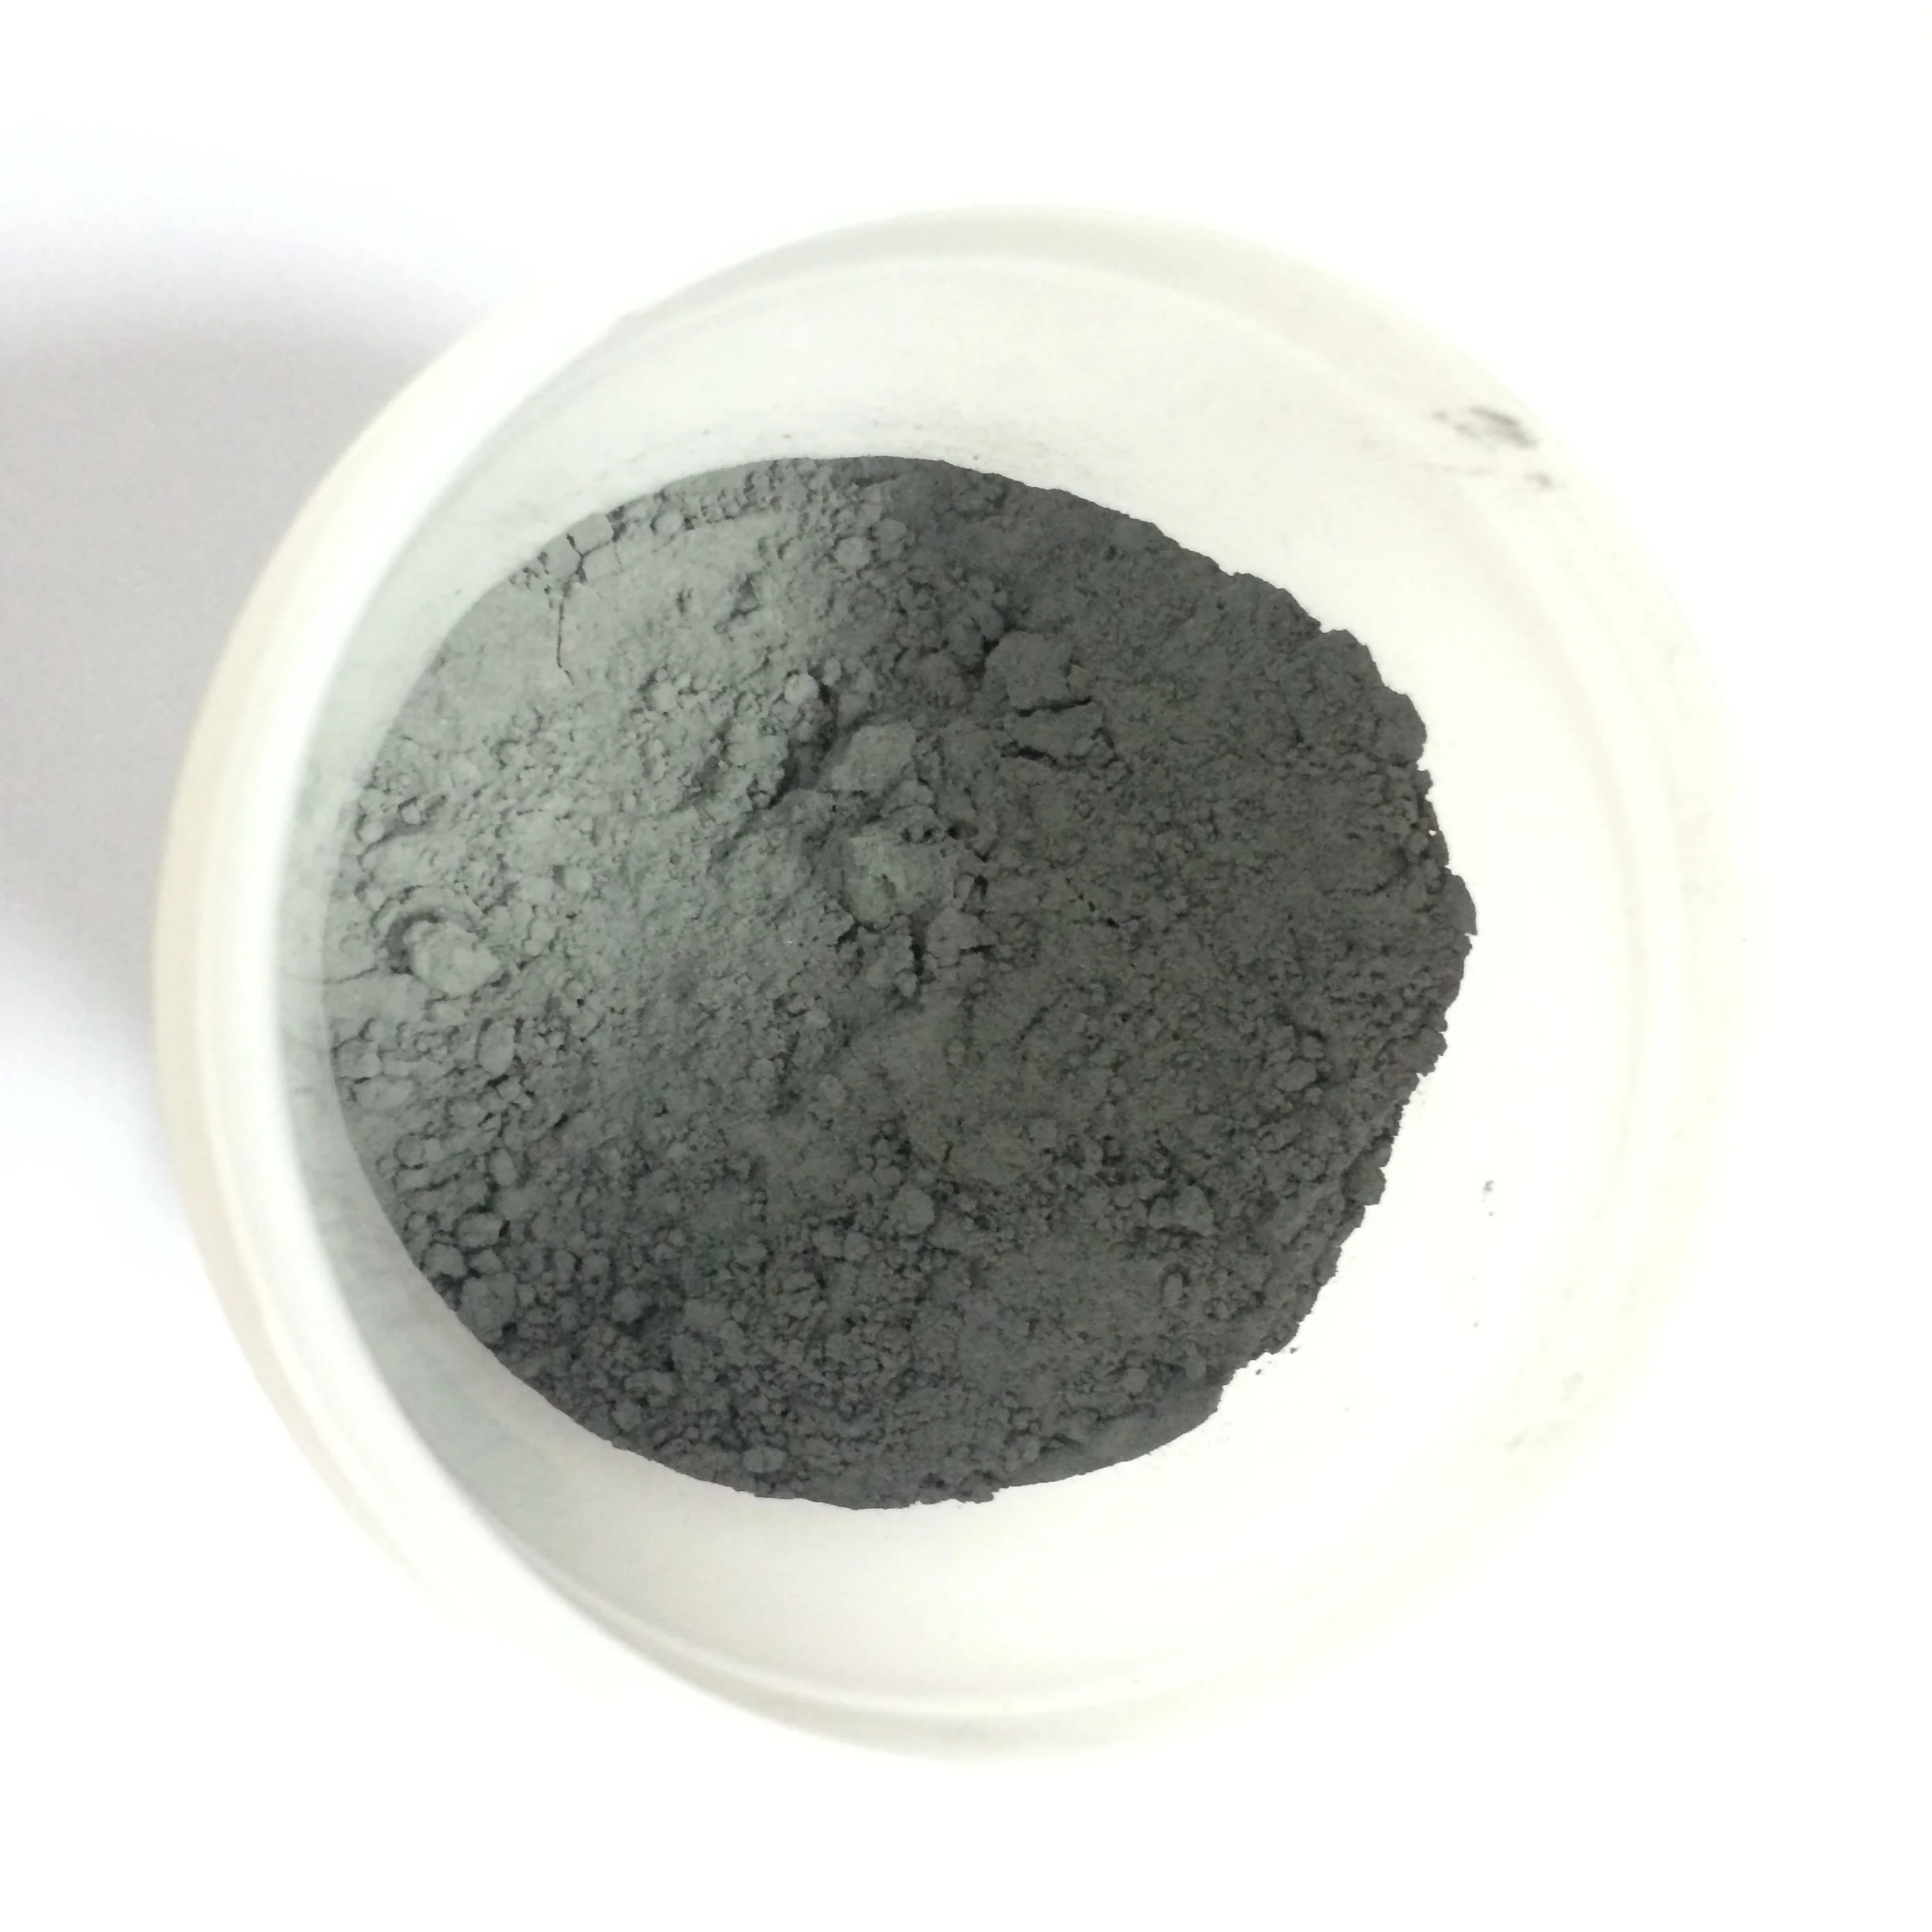 
UIV CHEM Buy pure ruthenium powder high quality ruthenium powder for gold mixing 